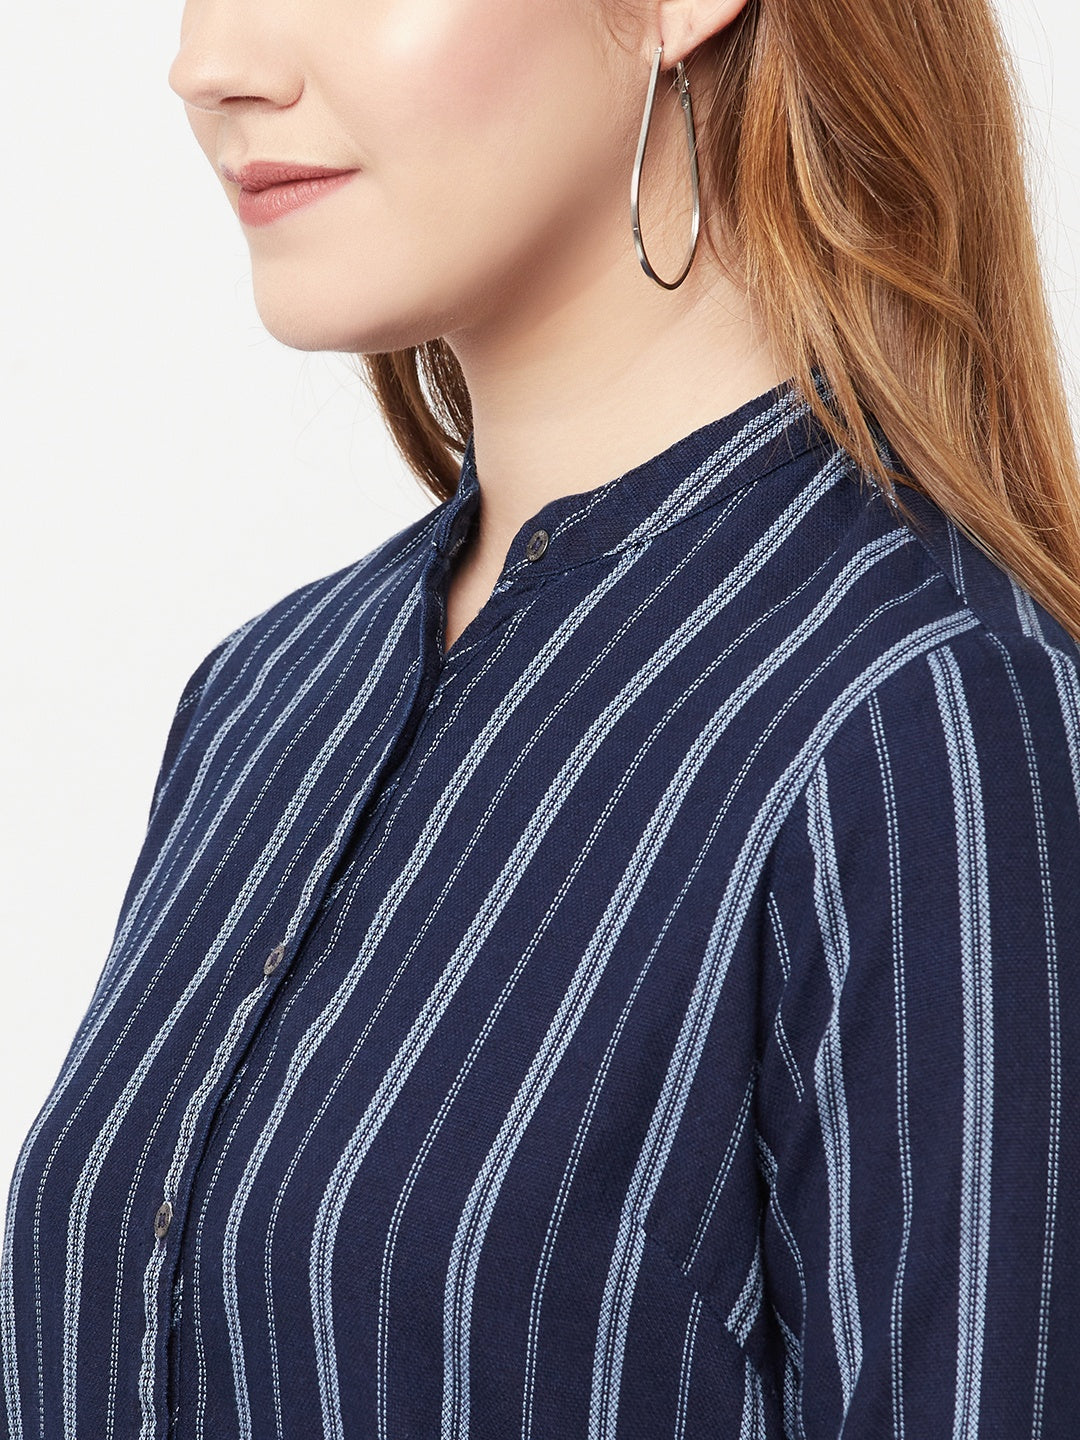 Navy Blue Striped Longline Shirt - Women Shirts